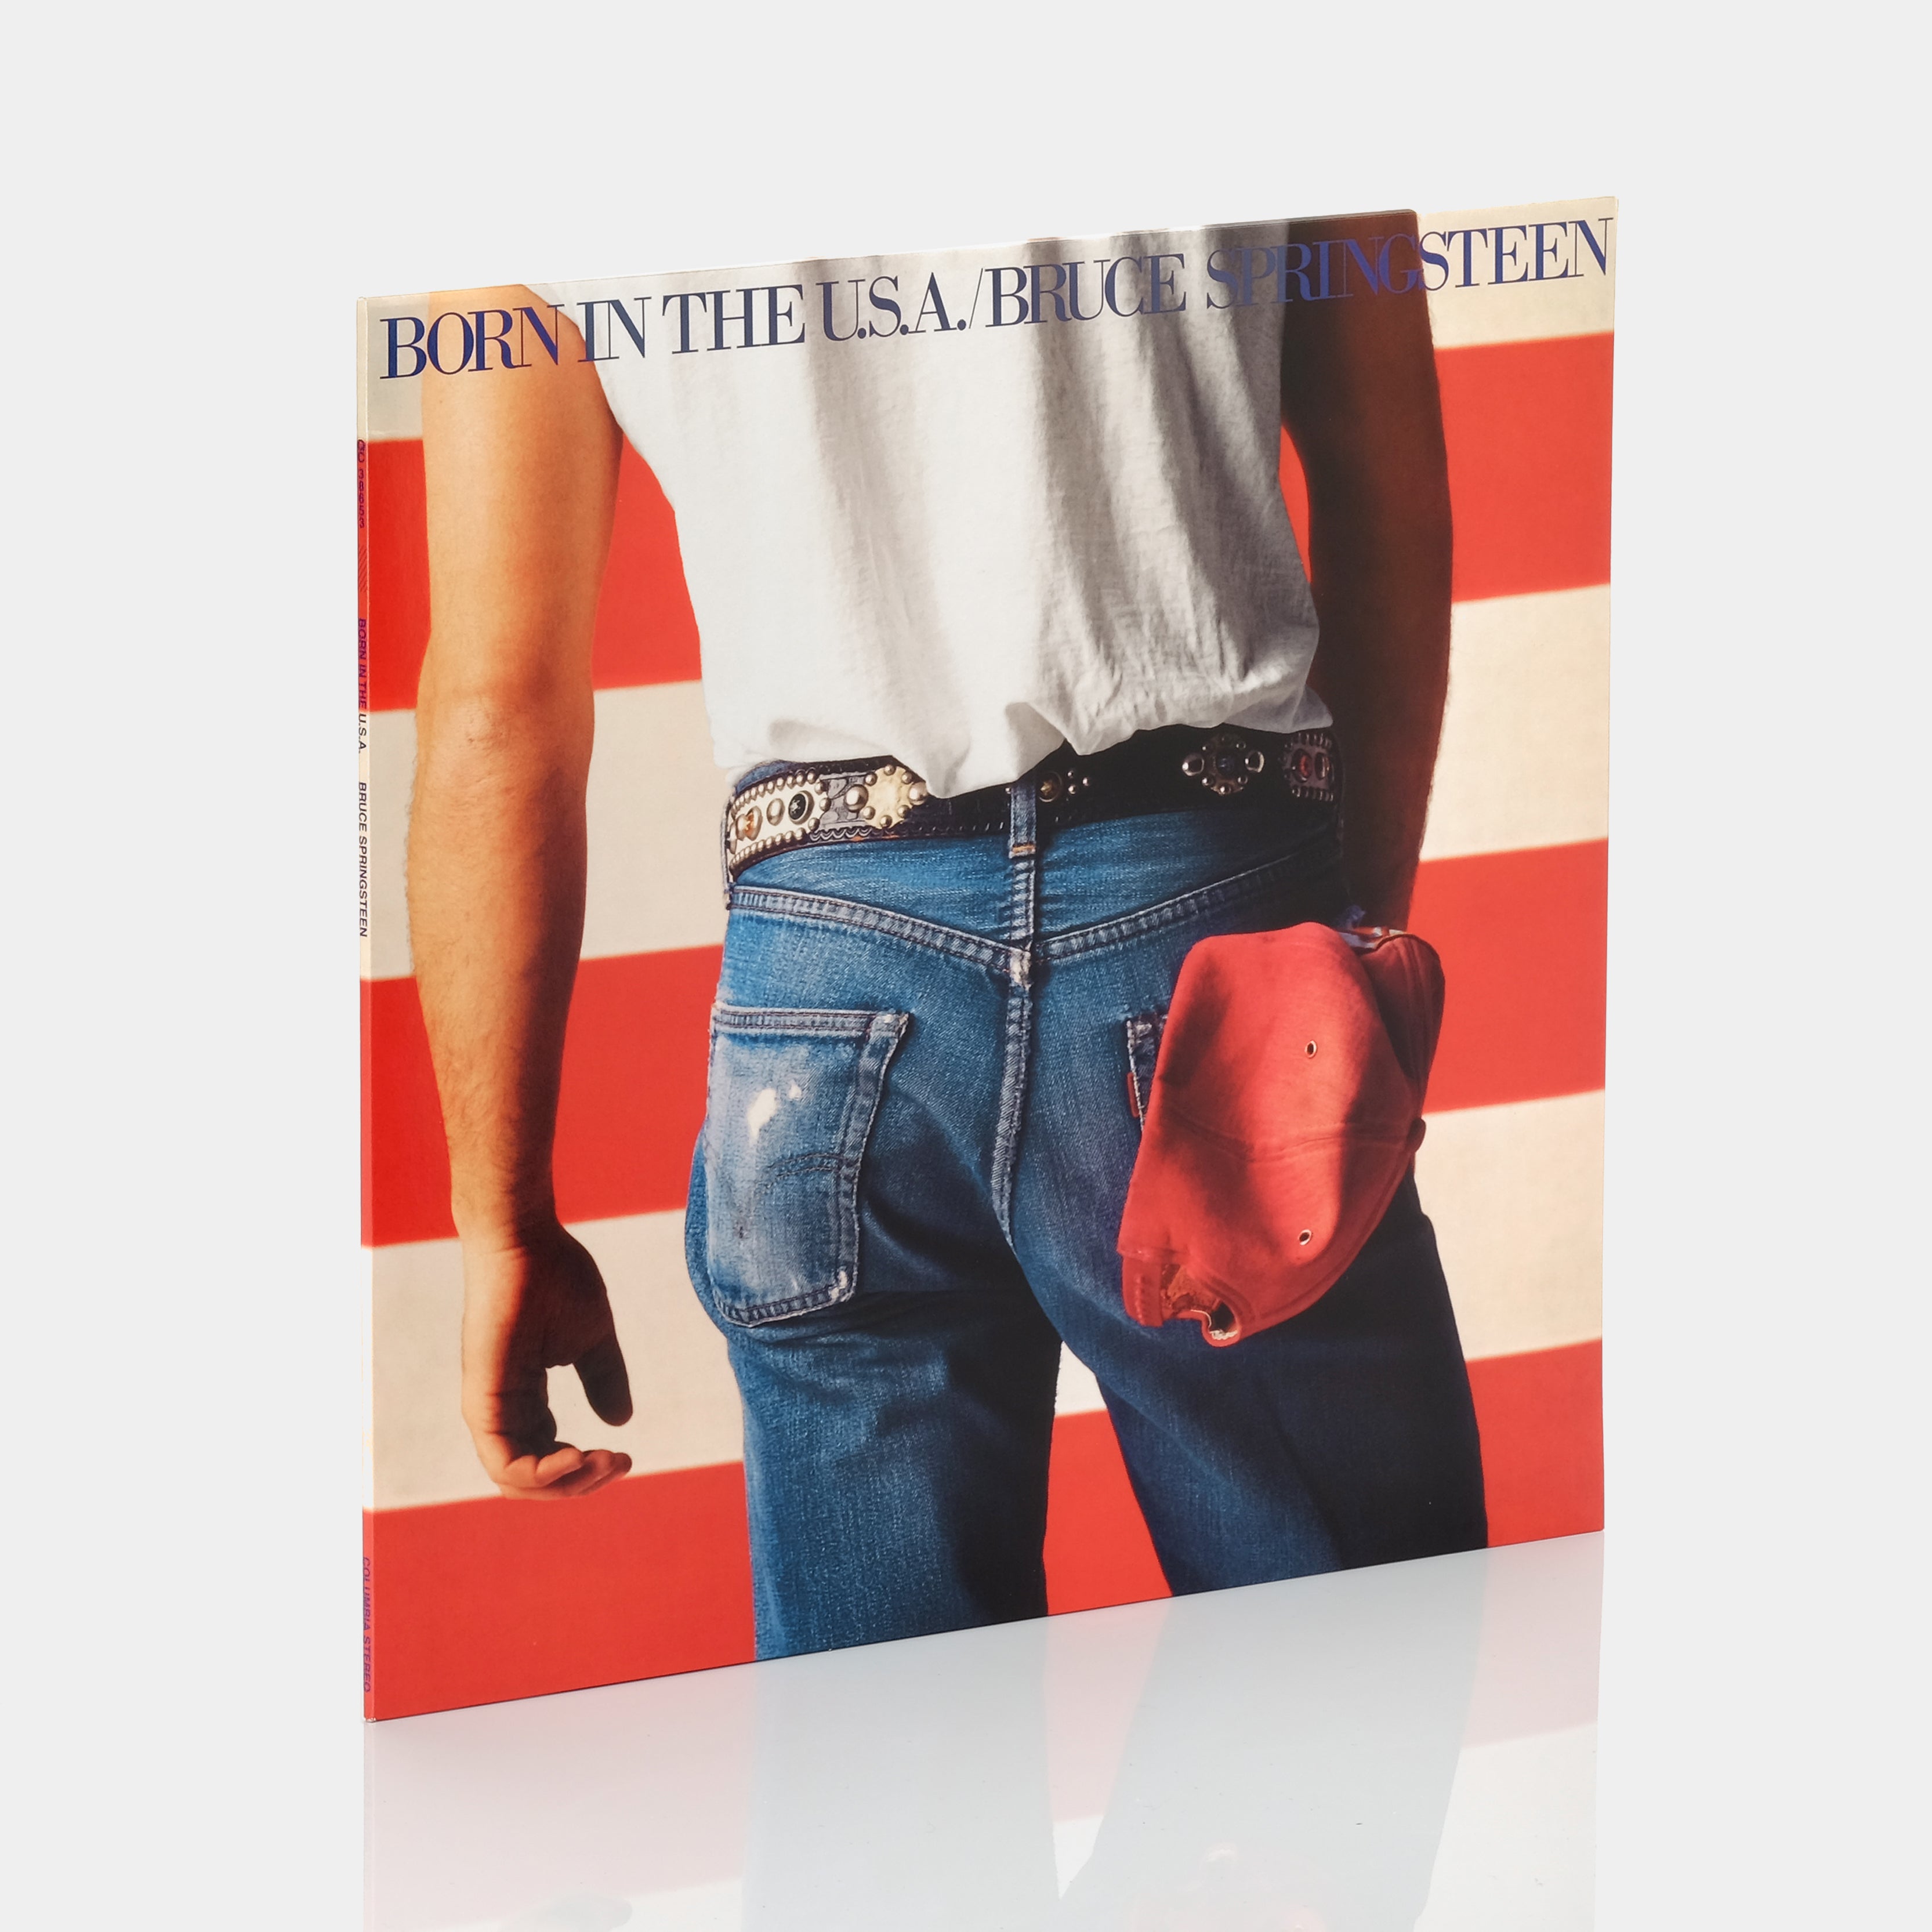 Bruce Springsteen - Born in the U.S.A. LP Vinyl Record